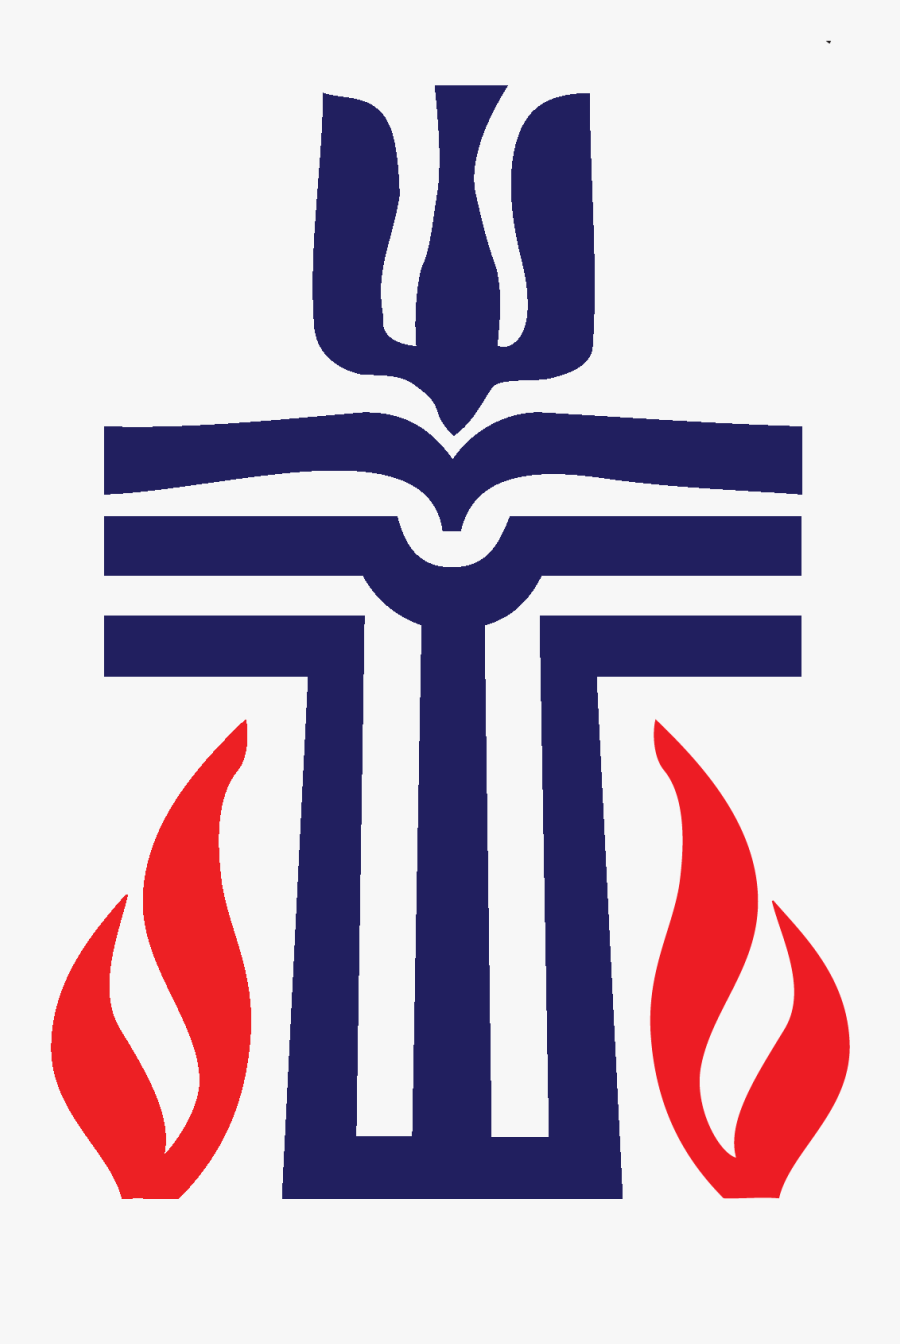 Mission Clipart Presbyterian - Symbol For Presbyterian Church, Transparent Clipart